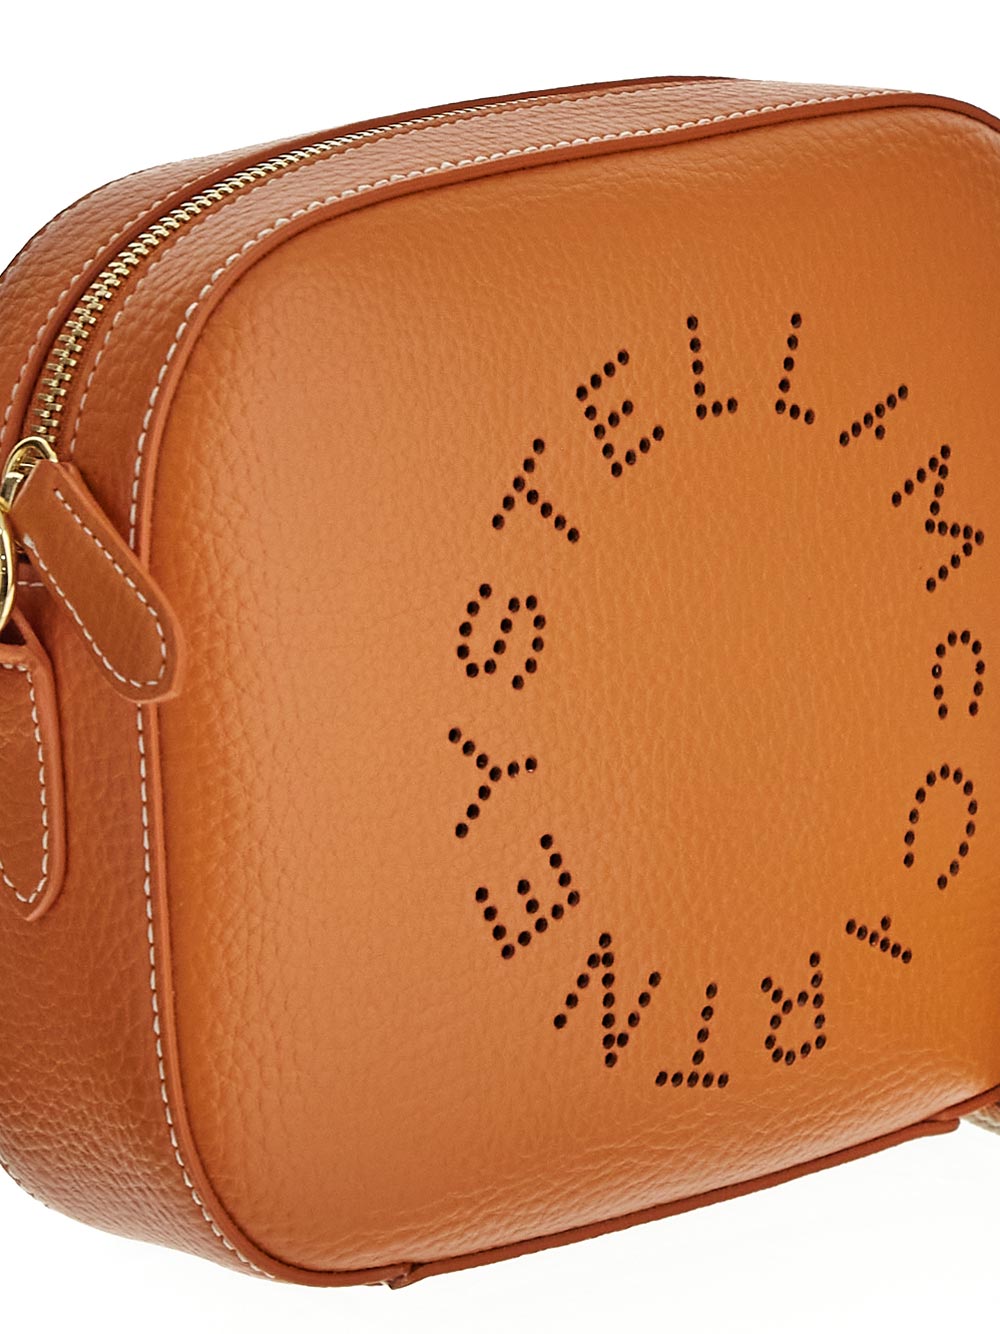 Stella McCartney Stella Logo crossbody bag